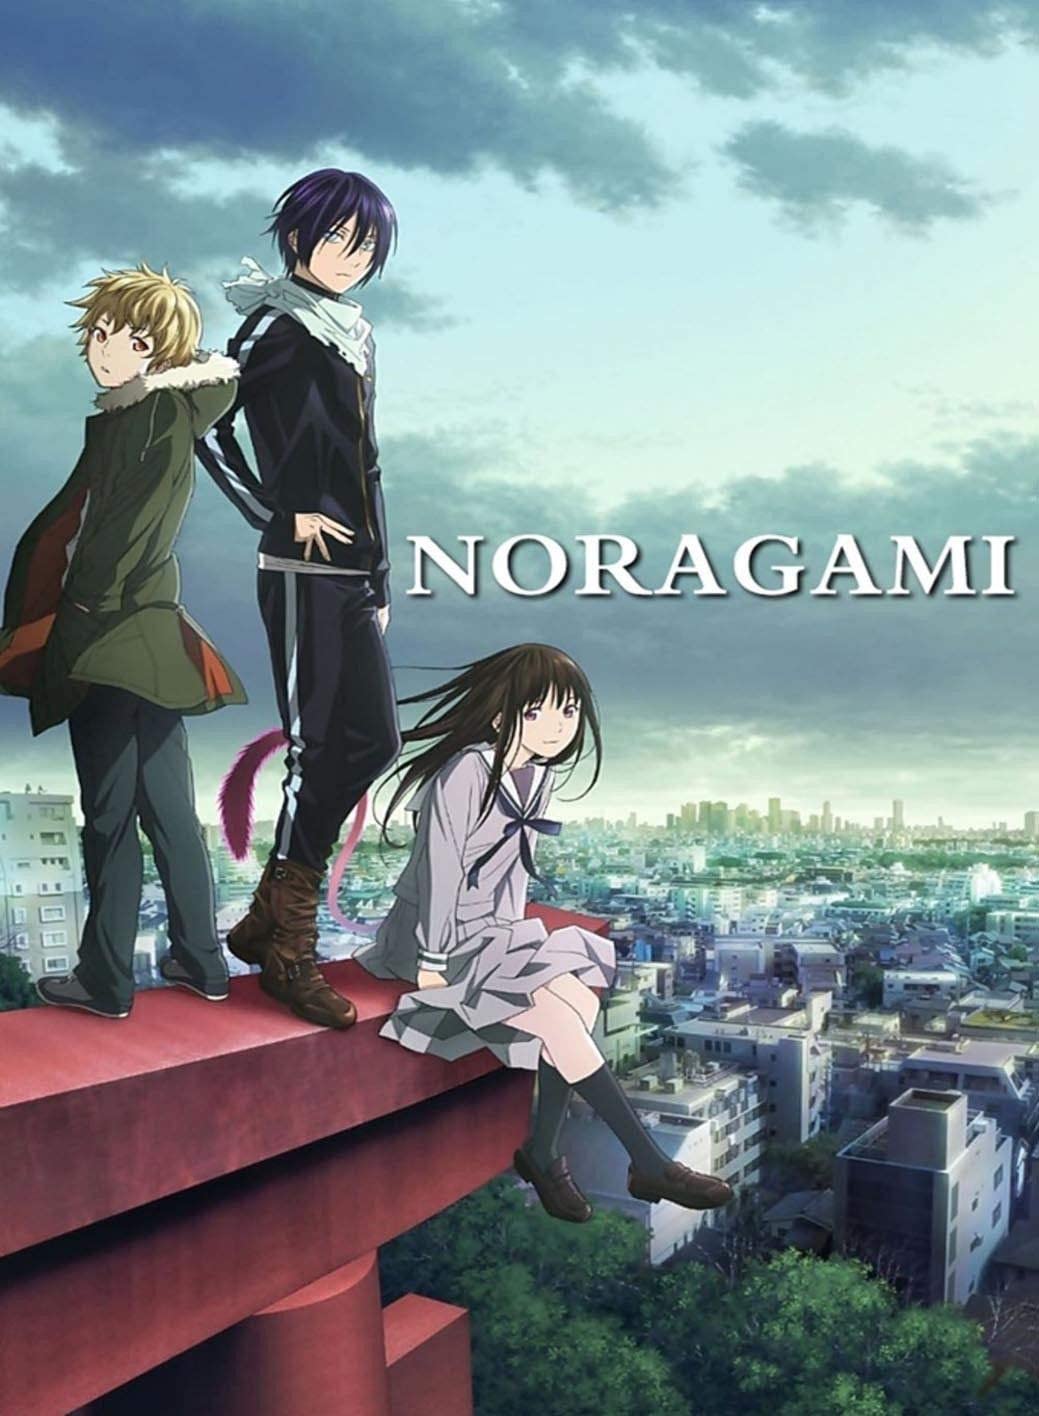 Noragami (TV Series 2014–2015) - IMDb